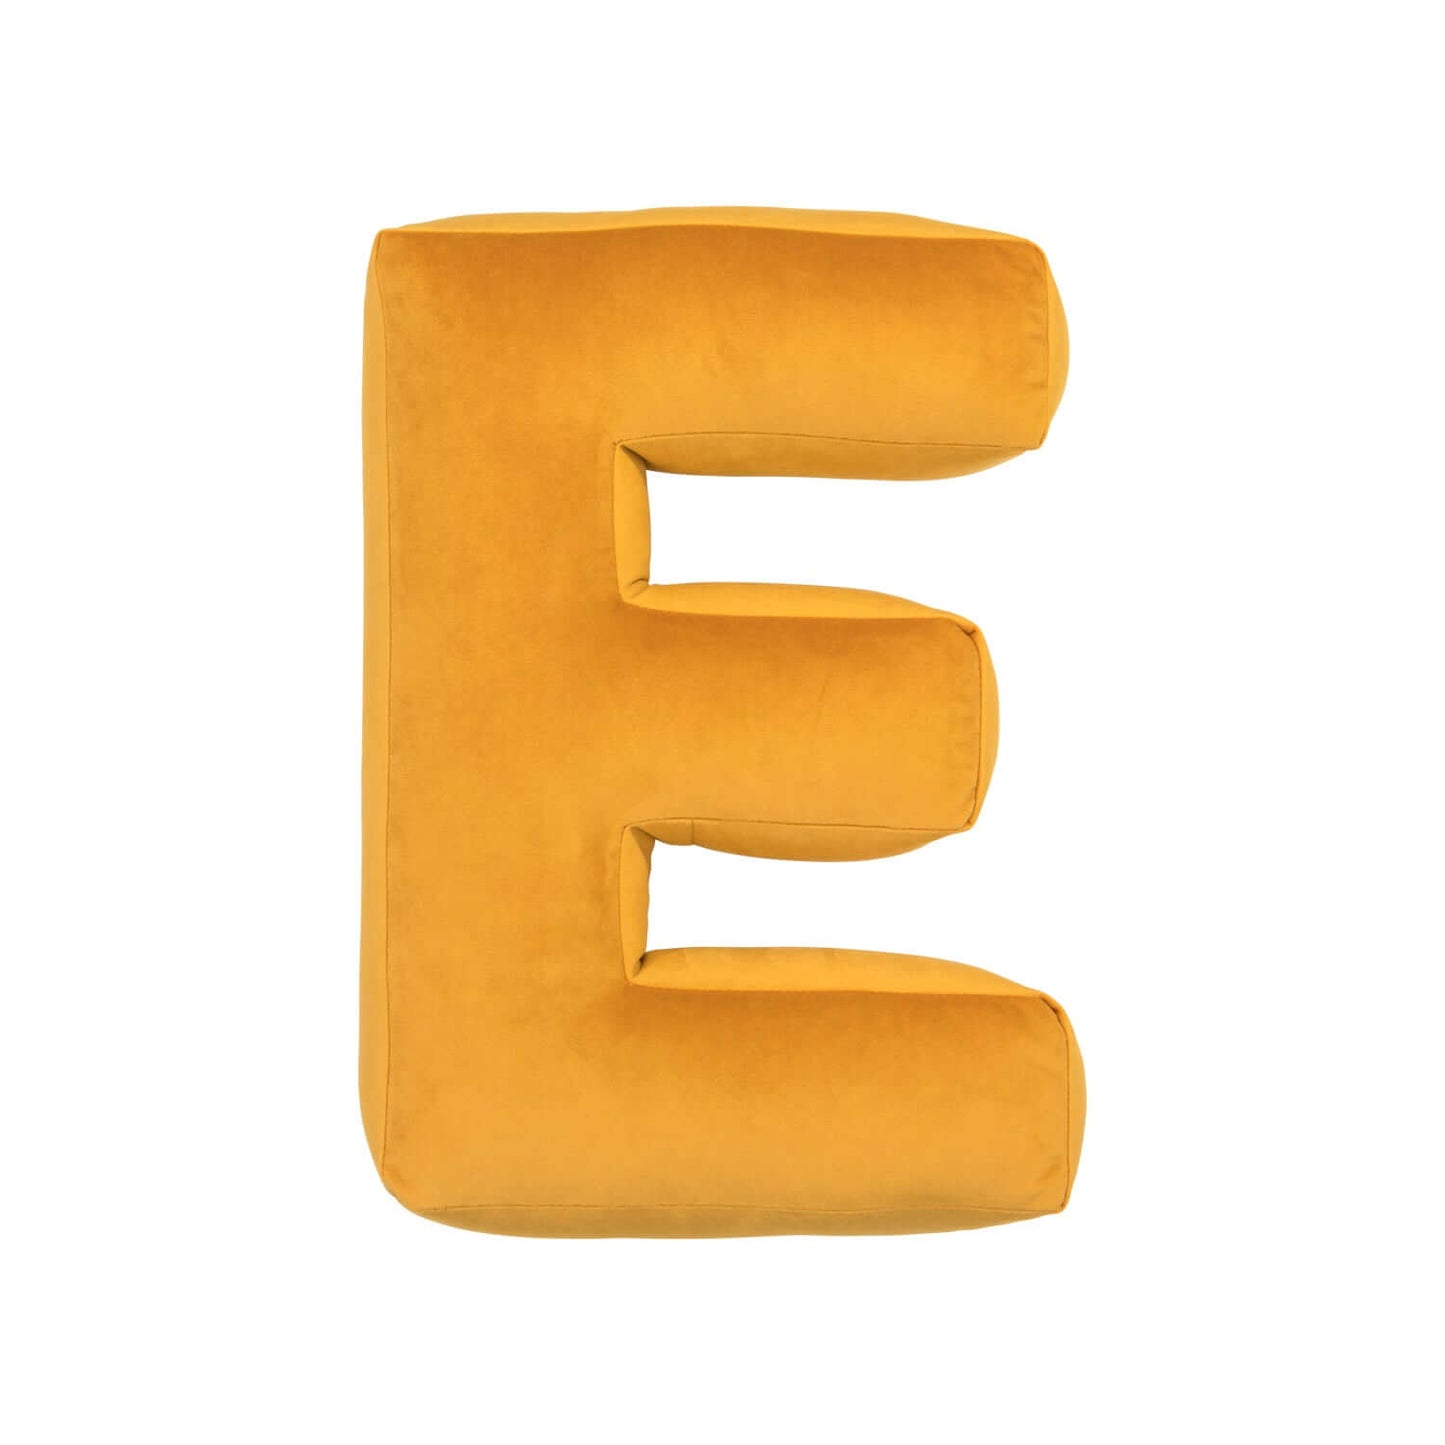 Poduszka literka welurowa E żółta od Bettys Home przód 